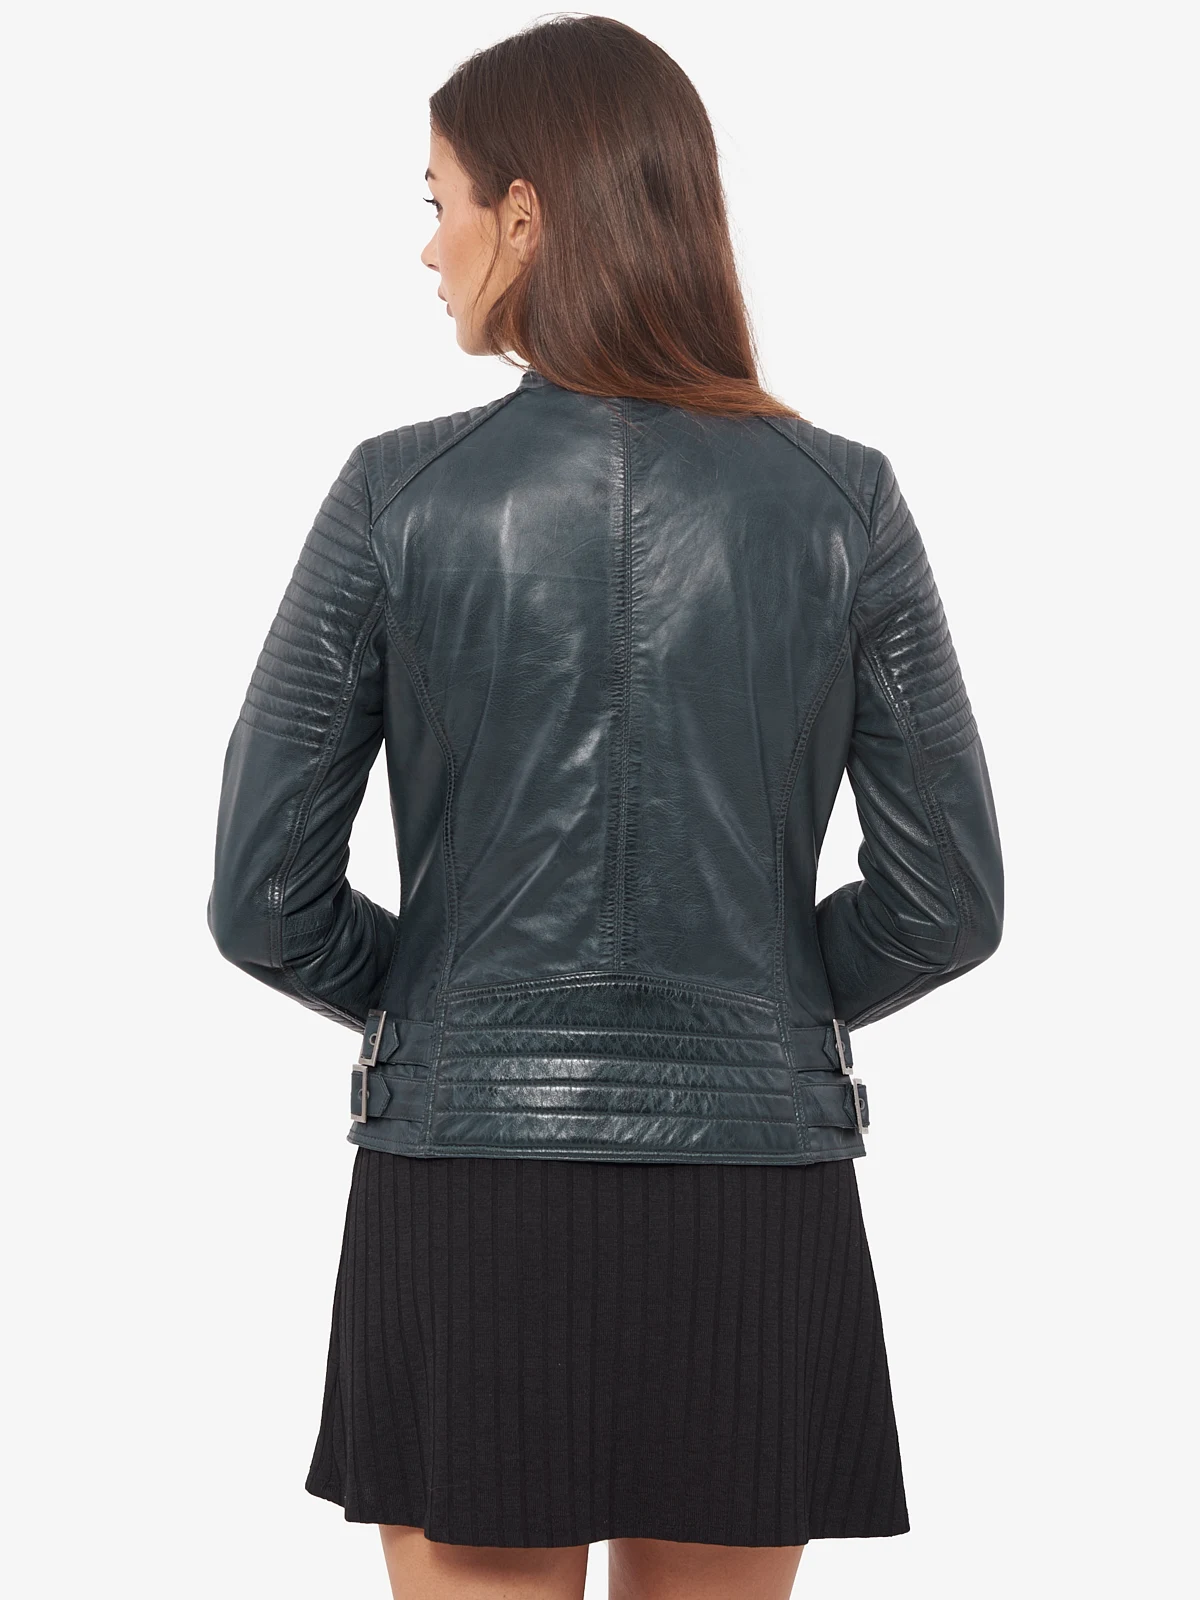 VAINAS, европейский бренд, Женская куртка из натуральной кожи, Женская куртка из натуральной овечьей кожи, мотоциклетная куртка, байкерские куртки Julie